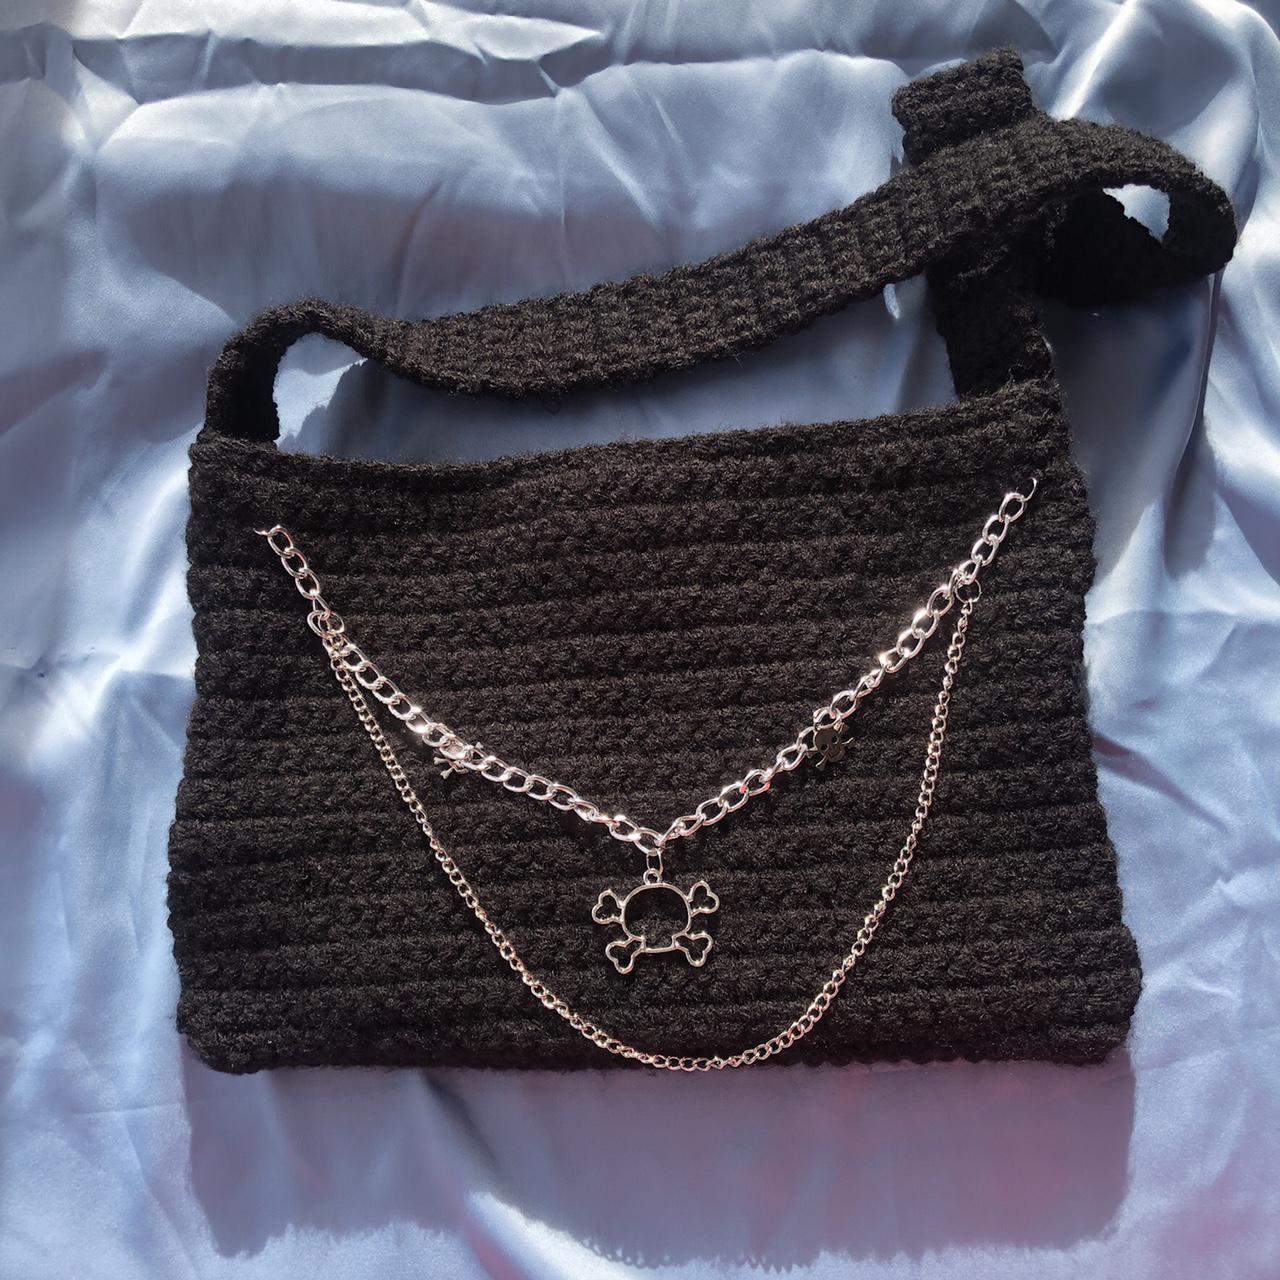 Product Image 2 - -skull crochet bag
-handmade by me
-All